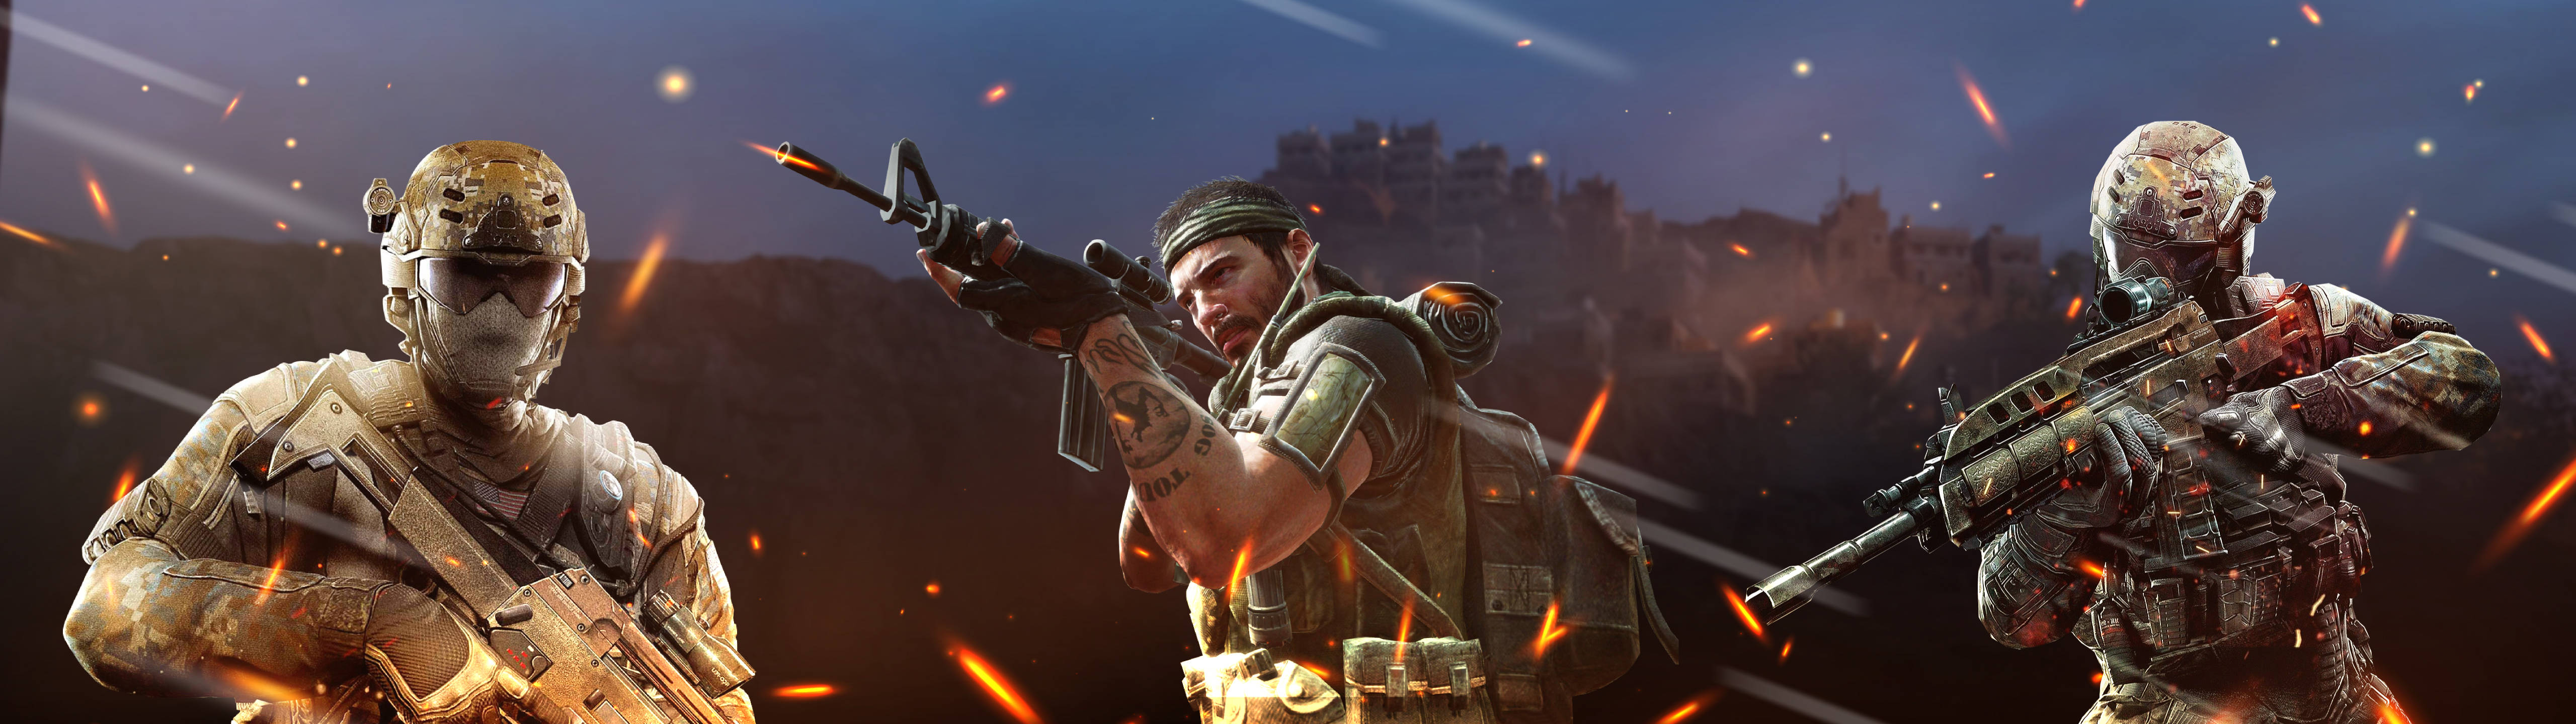 Sniper Elite Characters 5120x1440 Gaming Wallpaper